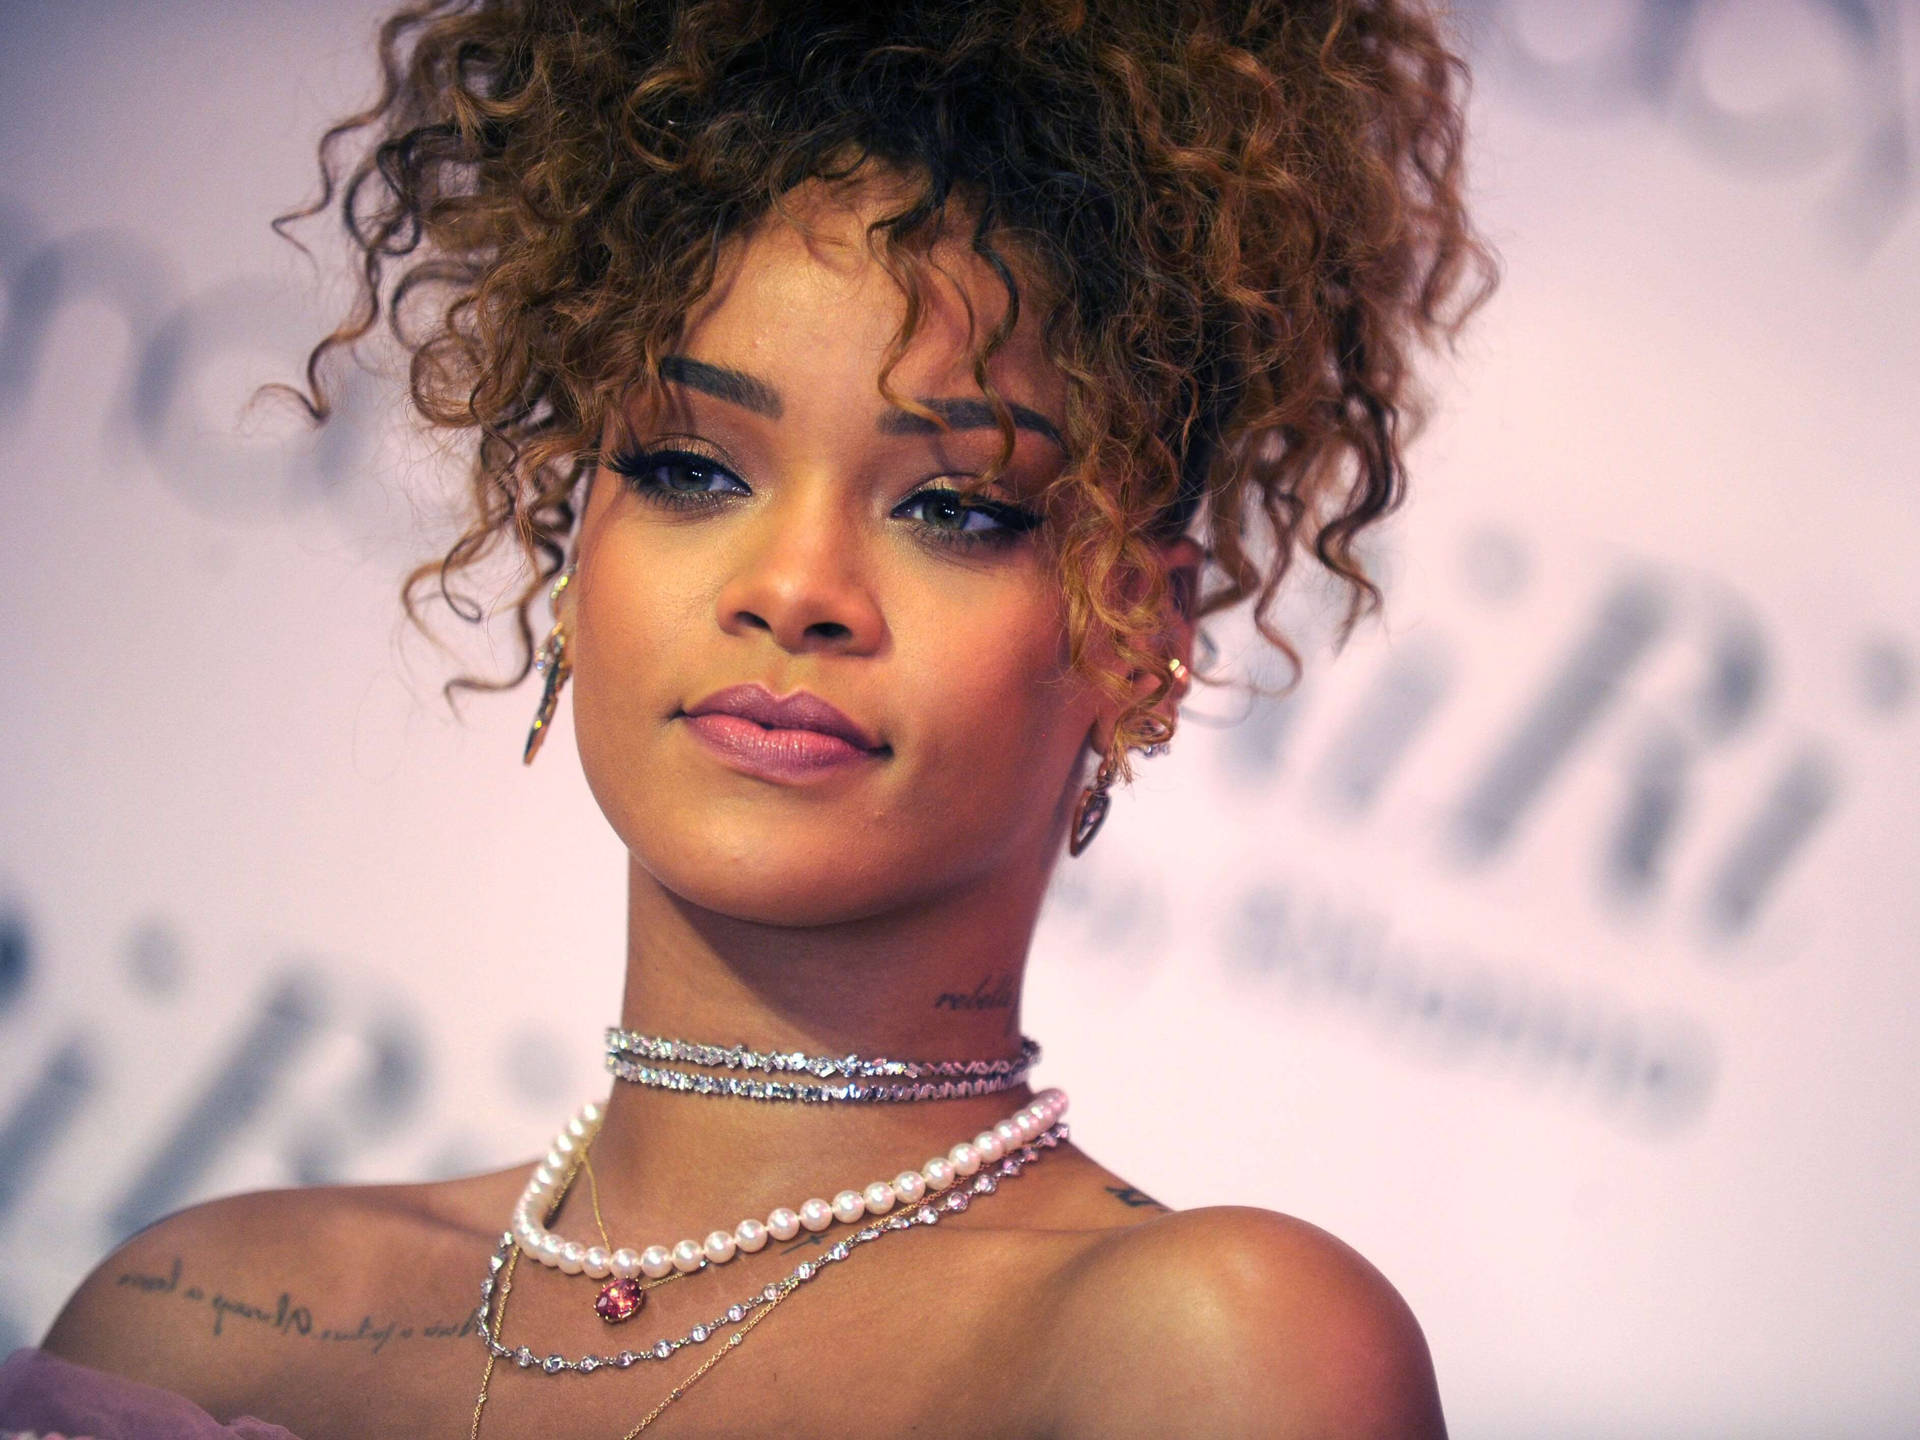 Free Rihanna Wallpaper Downloads, [100+] Rihanna Wallpapers for FREE |  